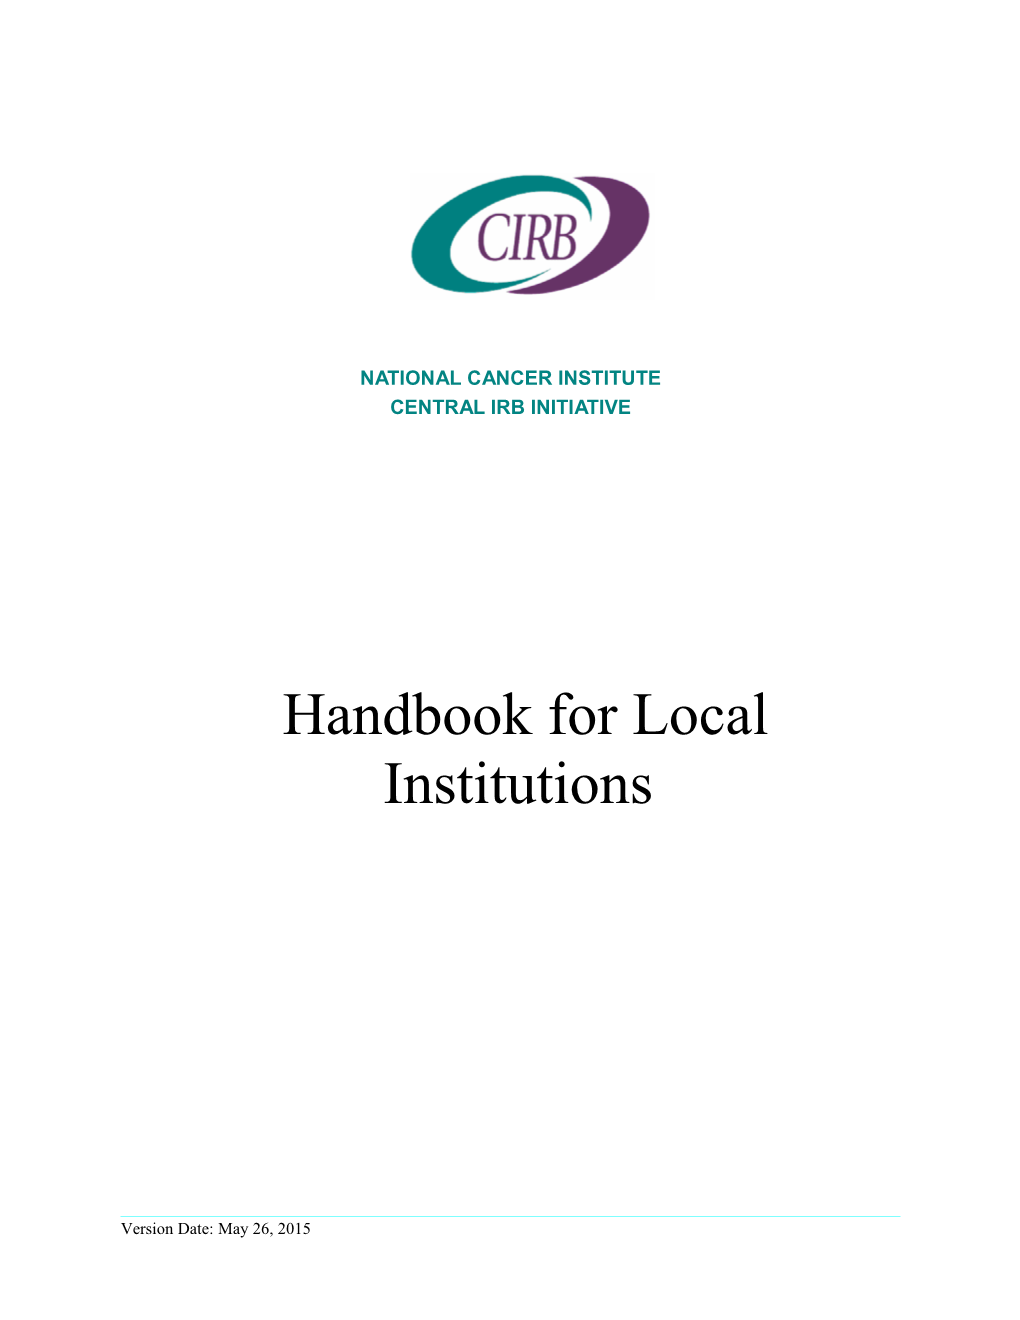 CIRB Handbook for Local Sites